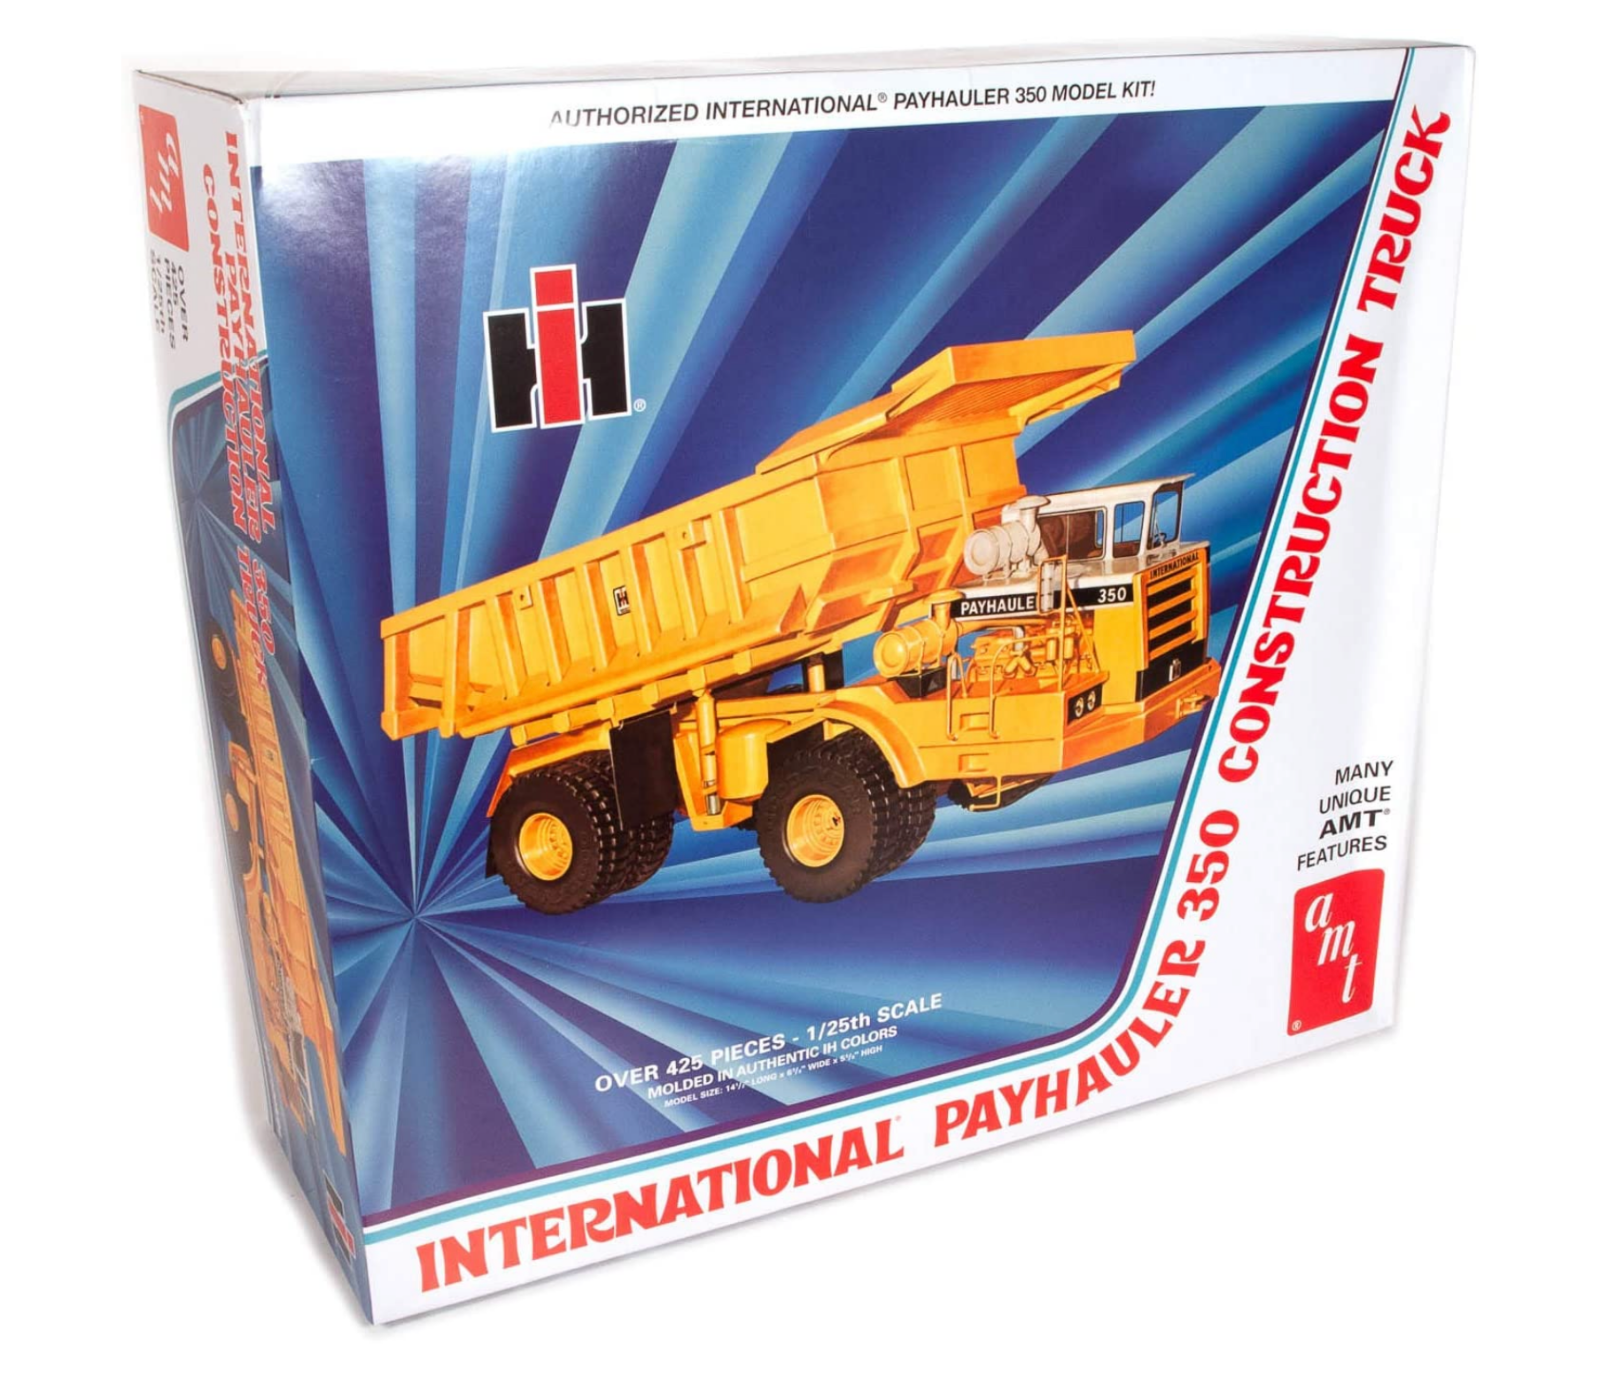 AMT 1209 International Payhauler 350 Construction Truck Model Kit for sale online